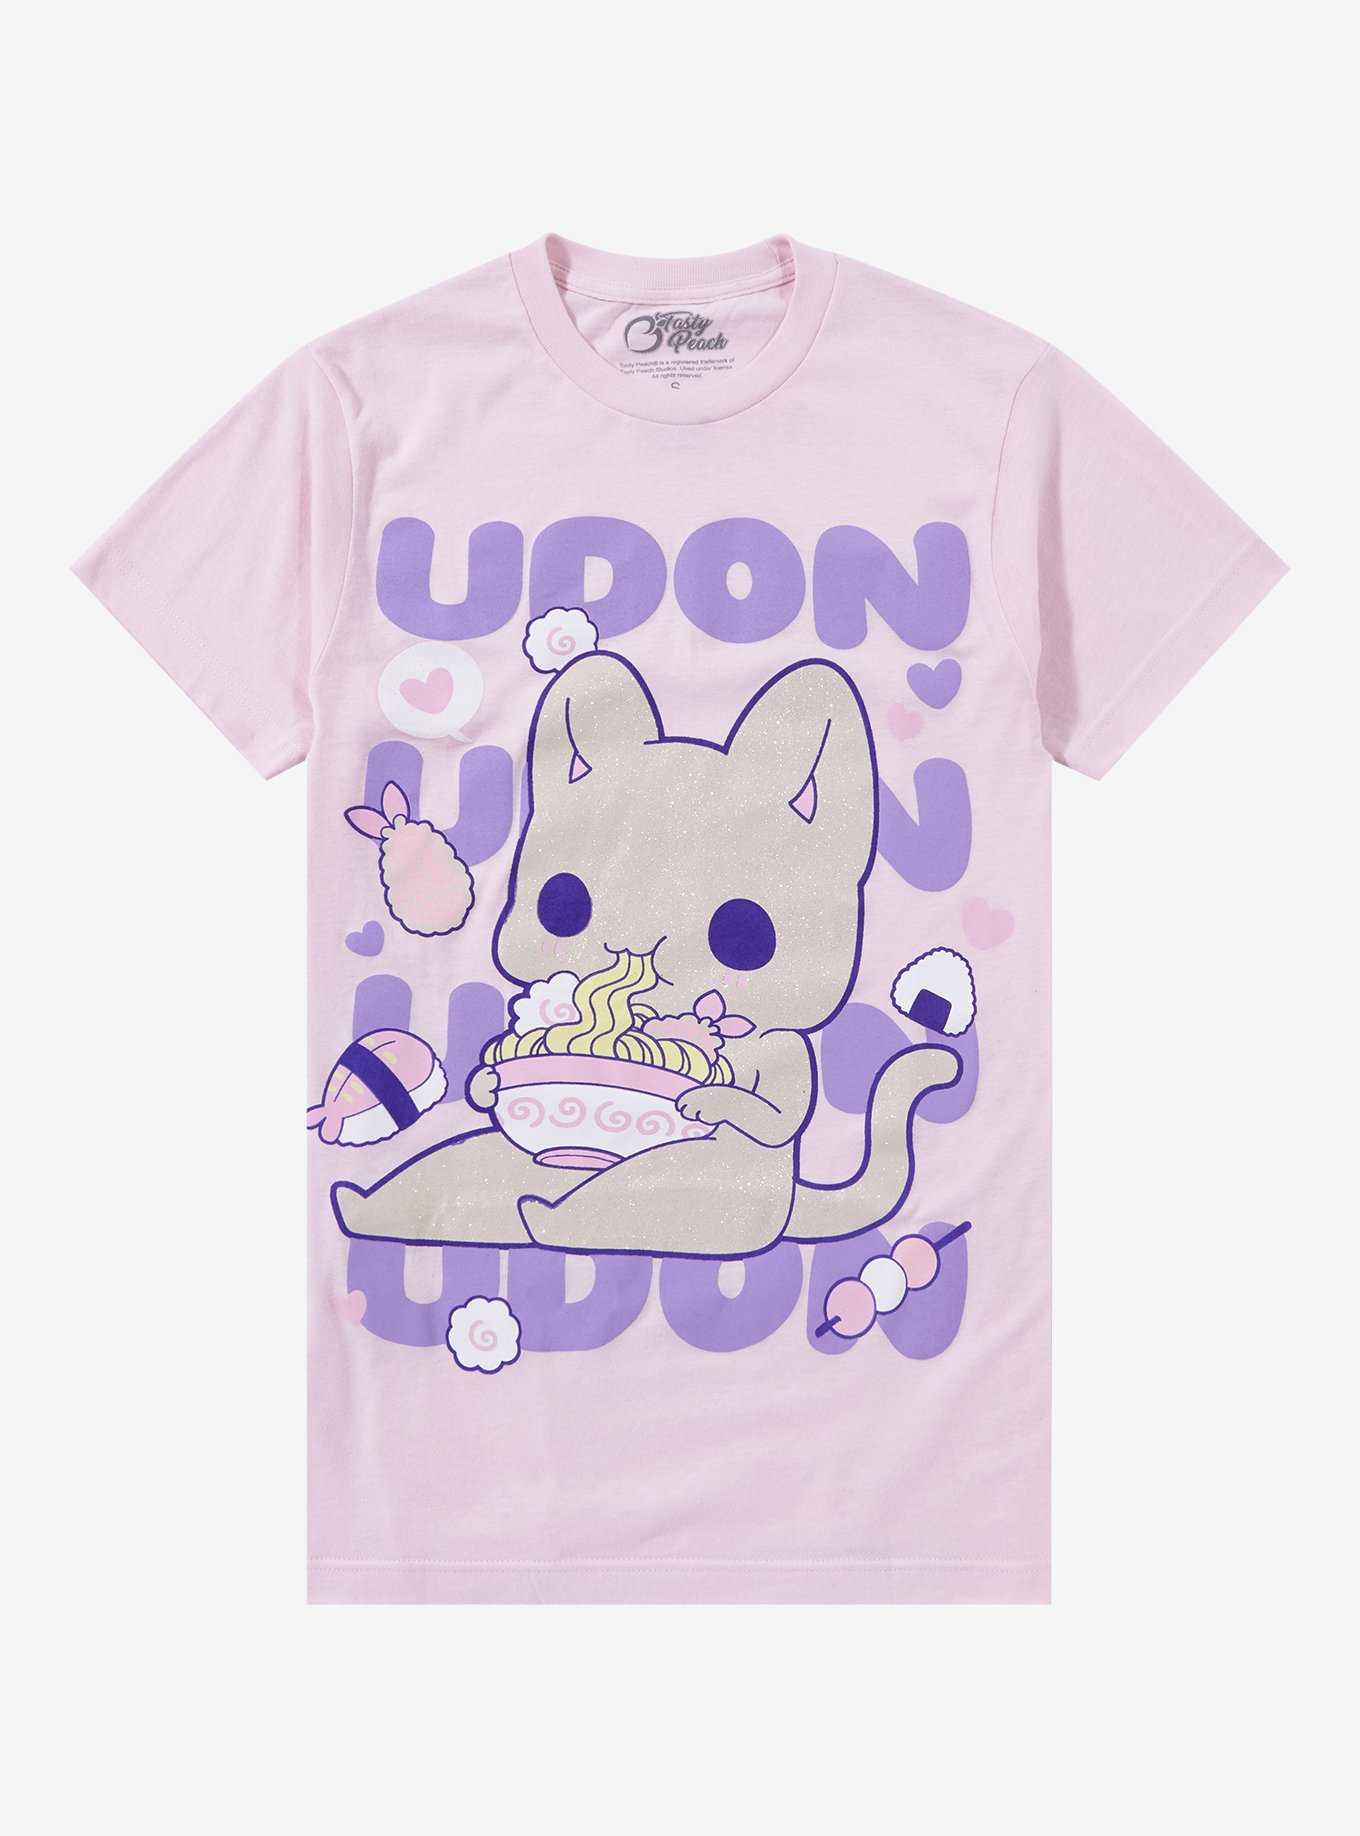 Tasty Peach Udon Glitter Boyfriend Fit Girls T-Shirt, , hi-res